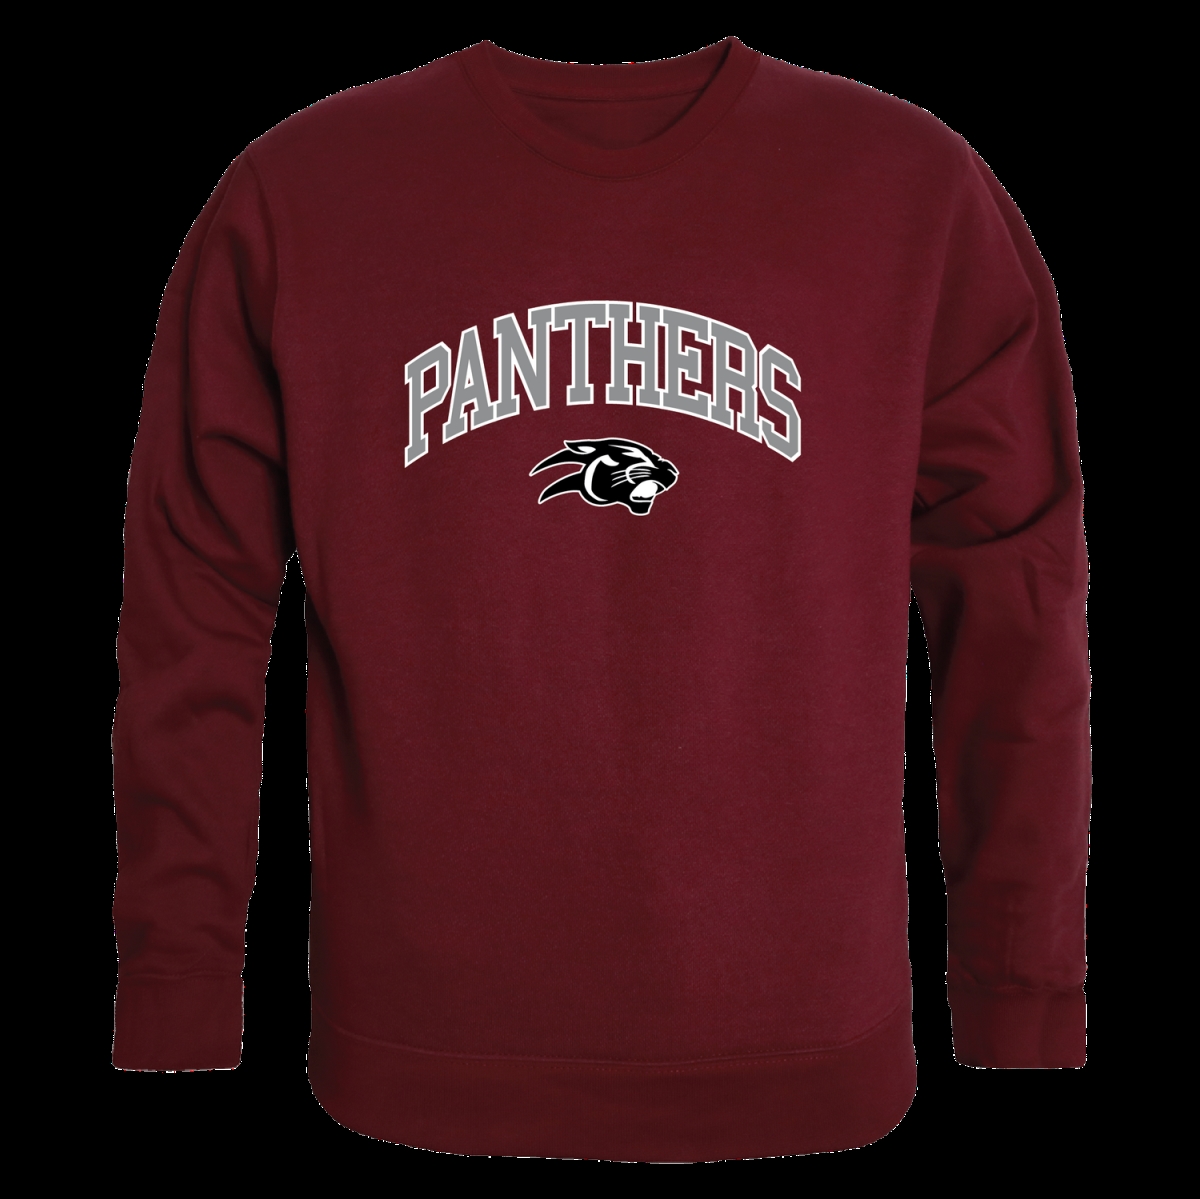 W Republic 541-729-MAR-02 Virginia Union University Panthers Campus Crewneck Sweatshirt&#44; Maroon - Medium